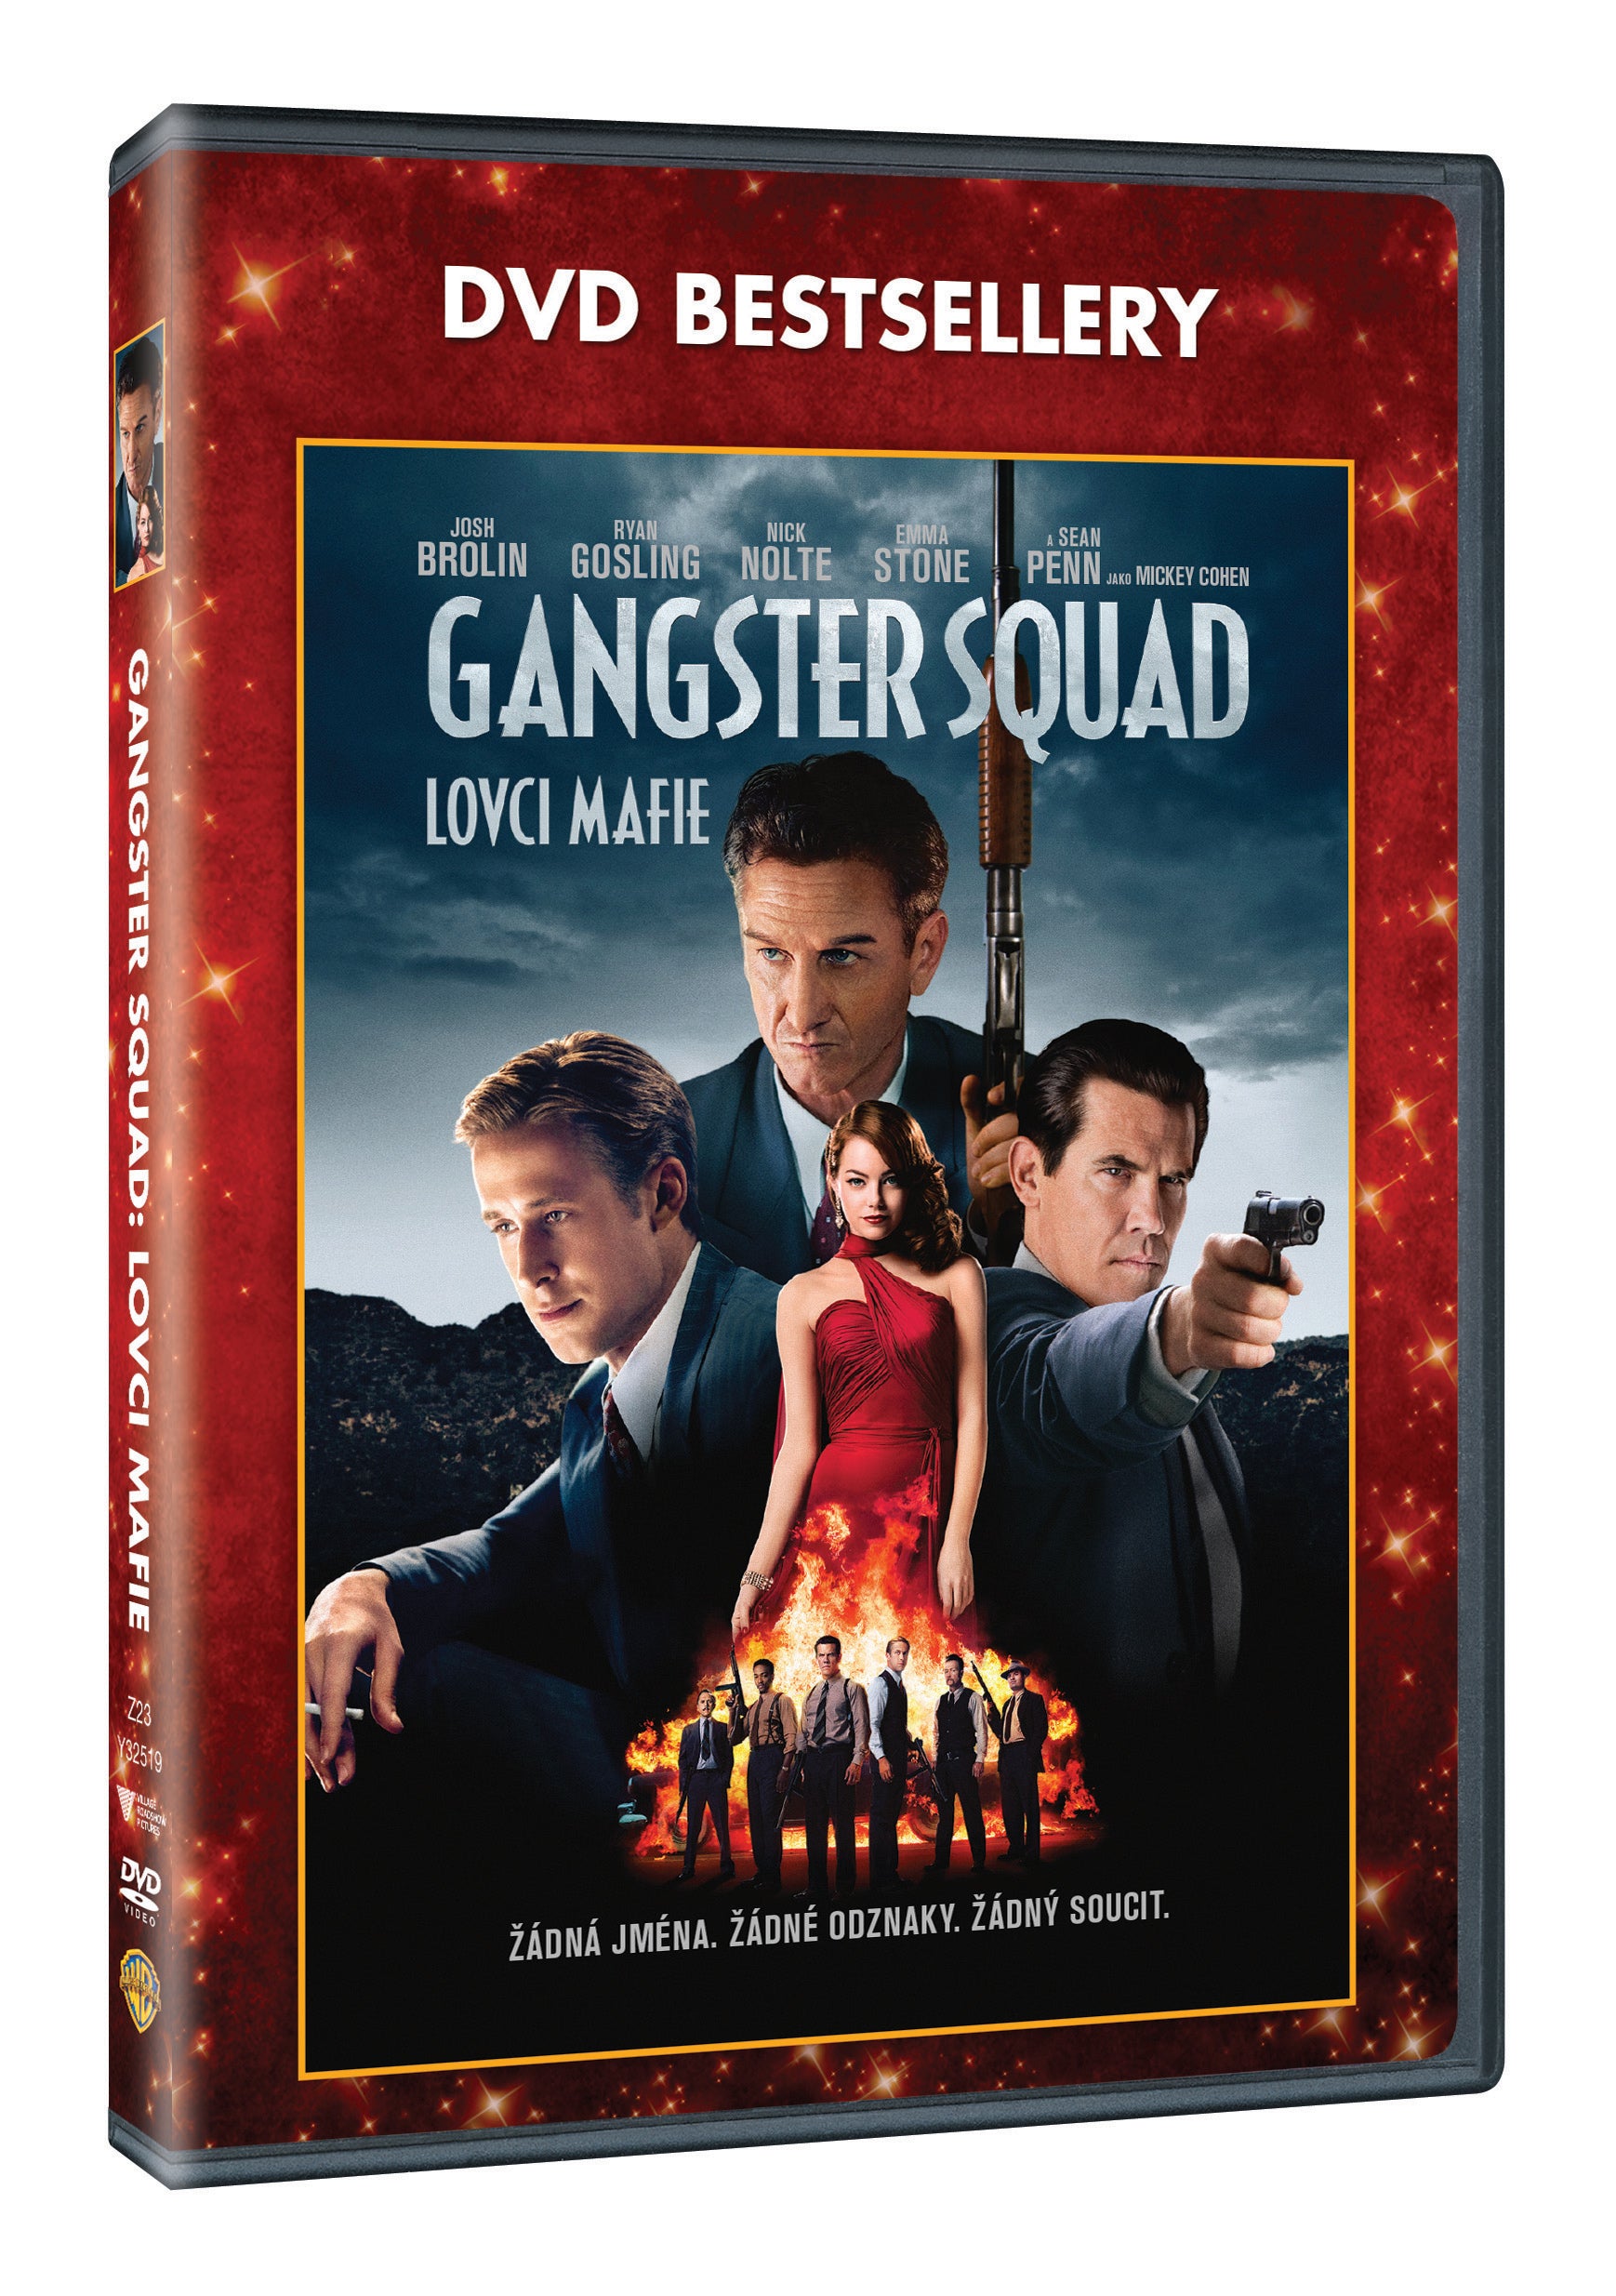 Gangster Squad - Lovci mafie - DVD bestsellery (Gangster Squad)